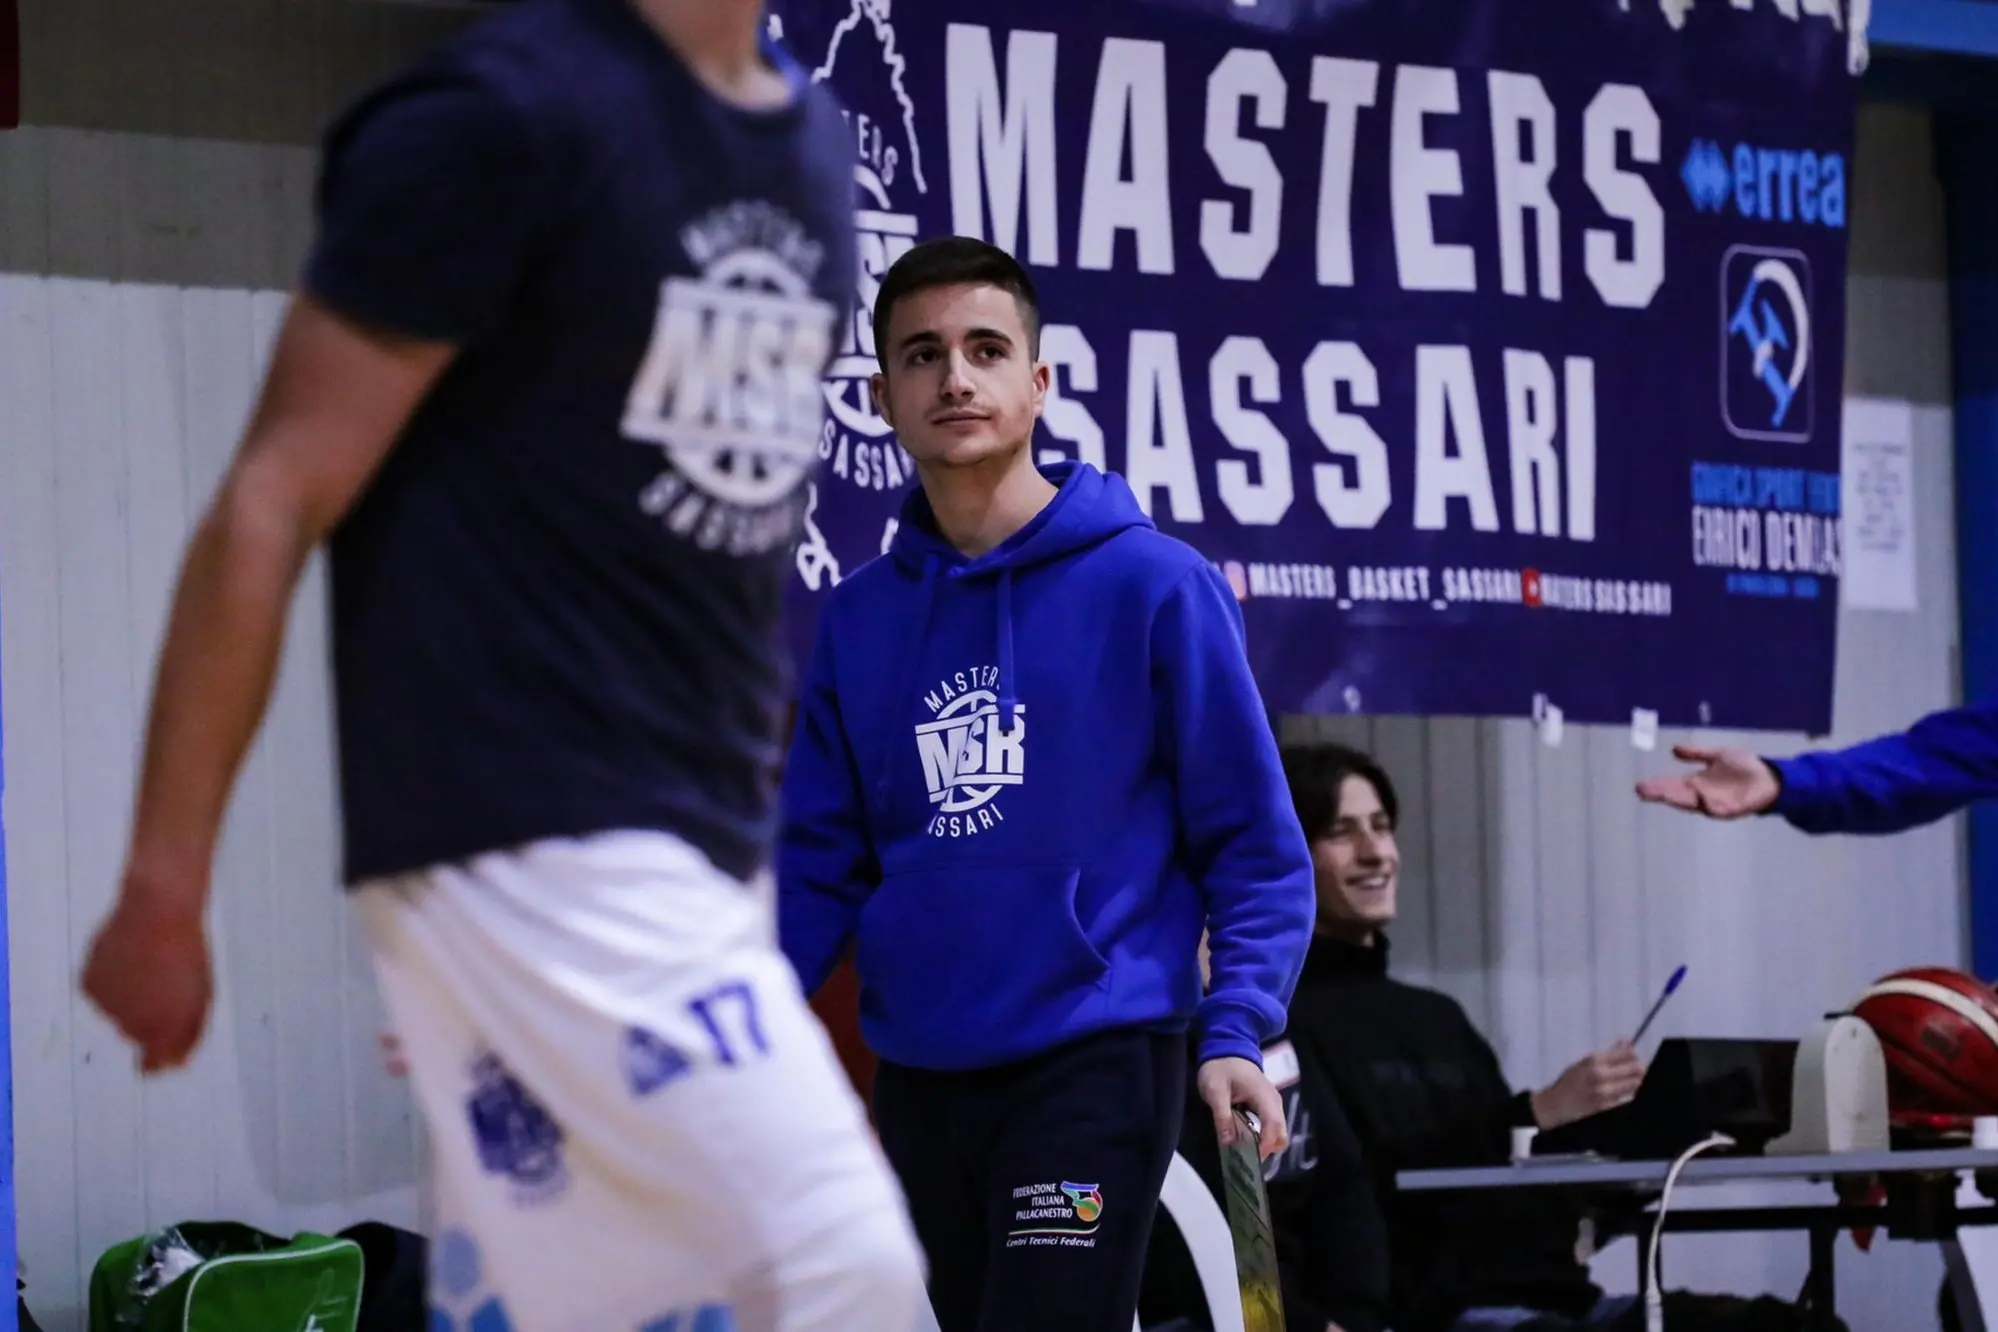 Luca Ruiu, coach del Basket 90 Masters Sassari (foto concessa)